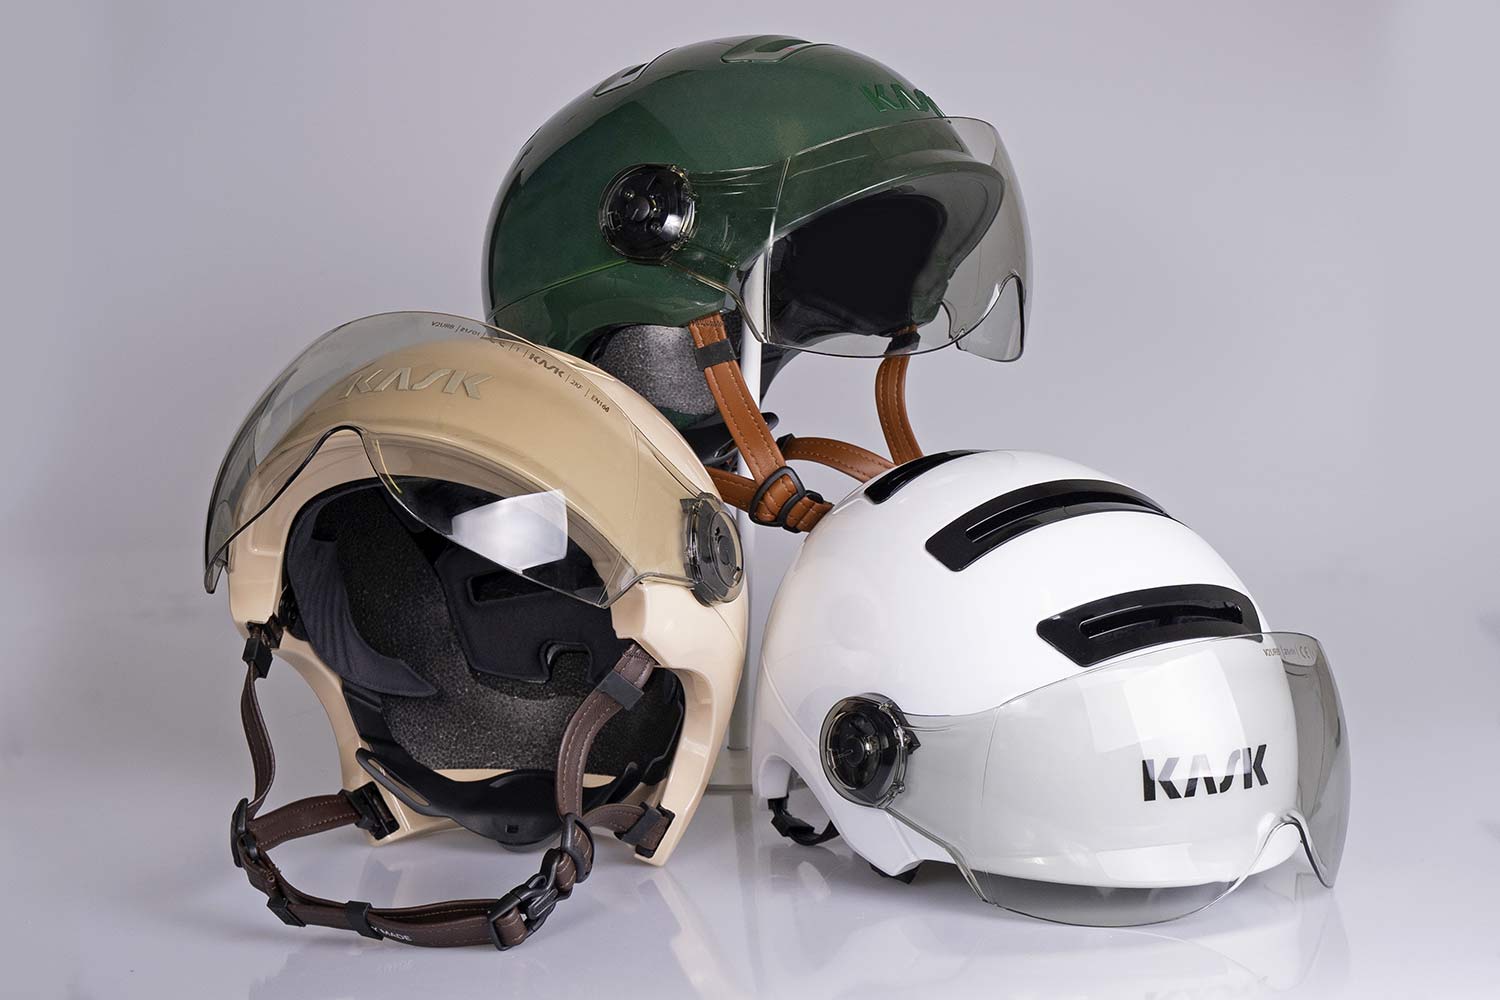 Kask Urban R & Moebius city commuter bike helmets